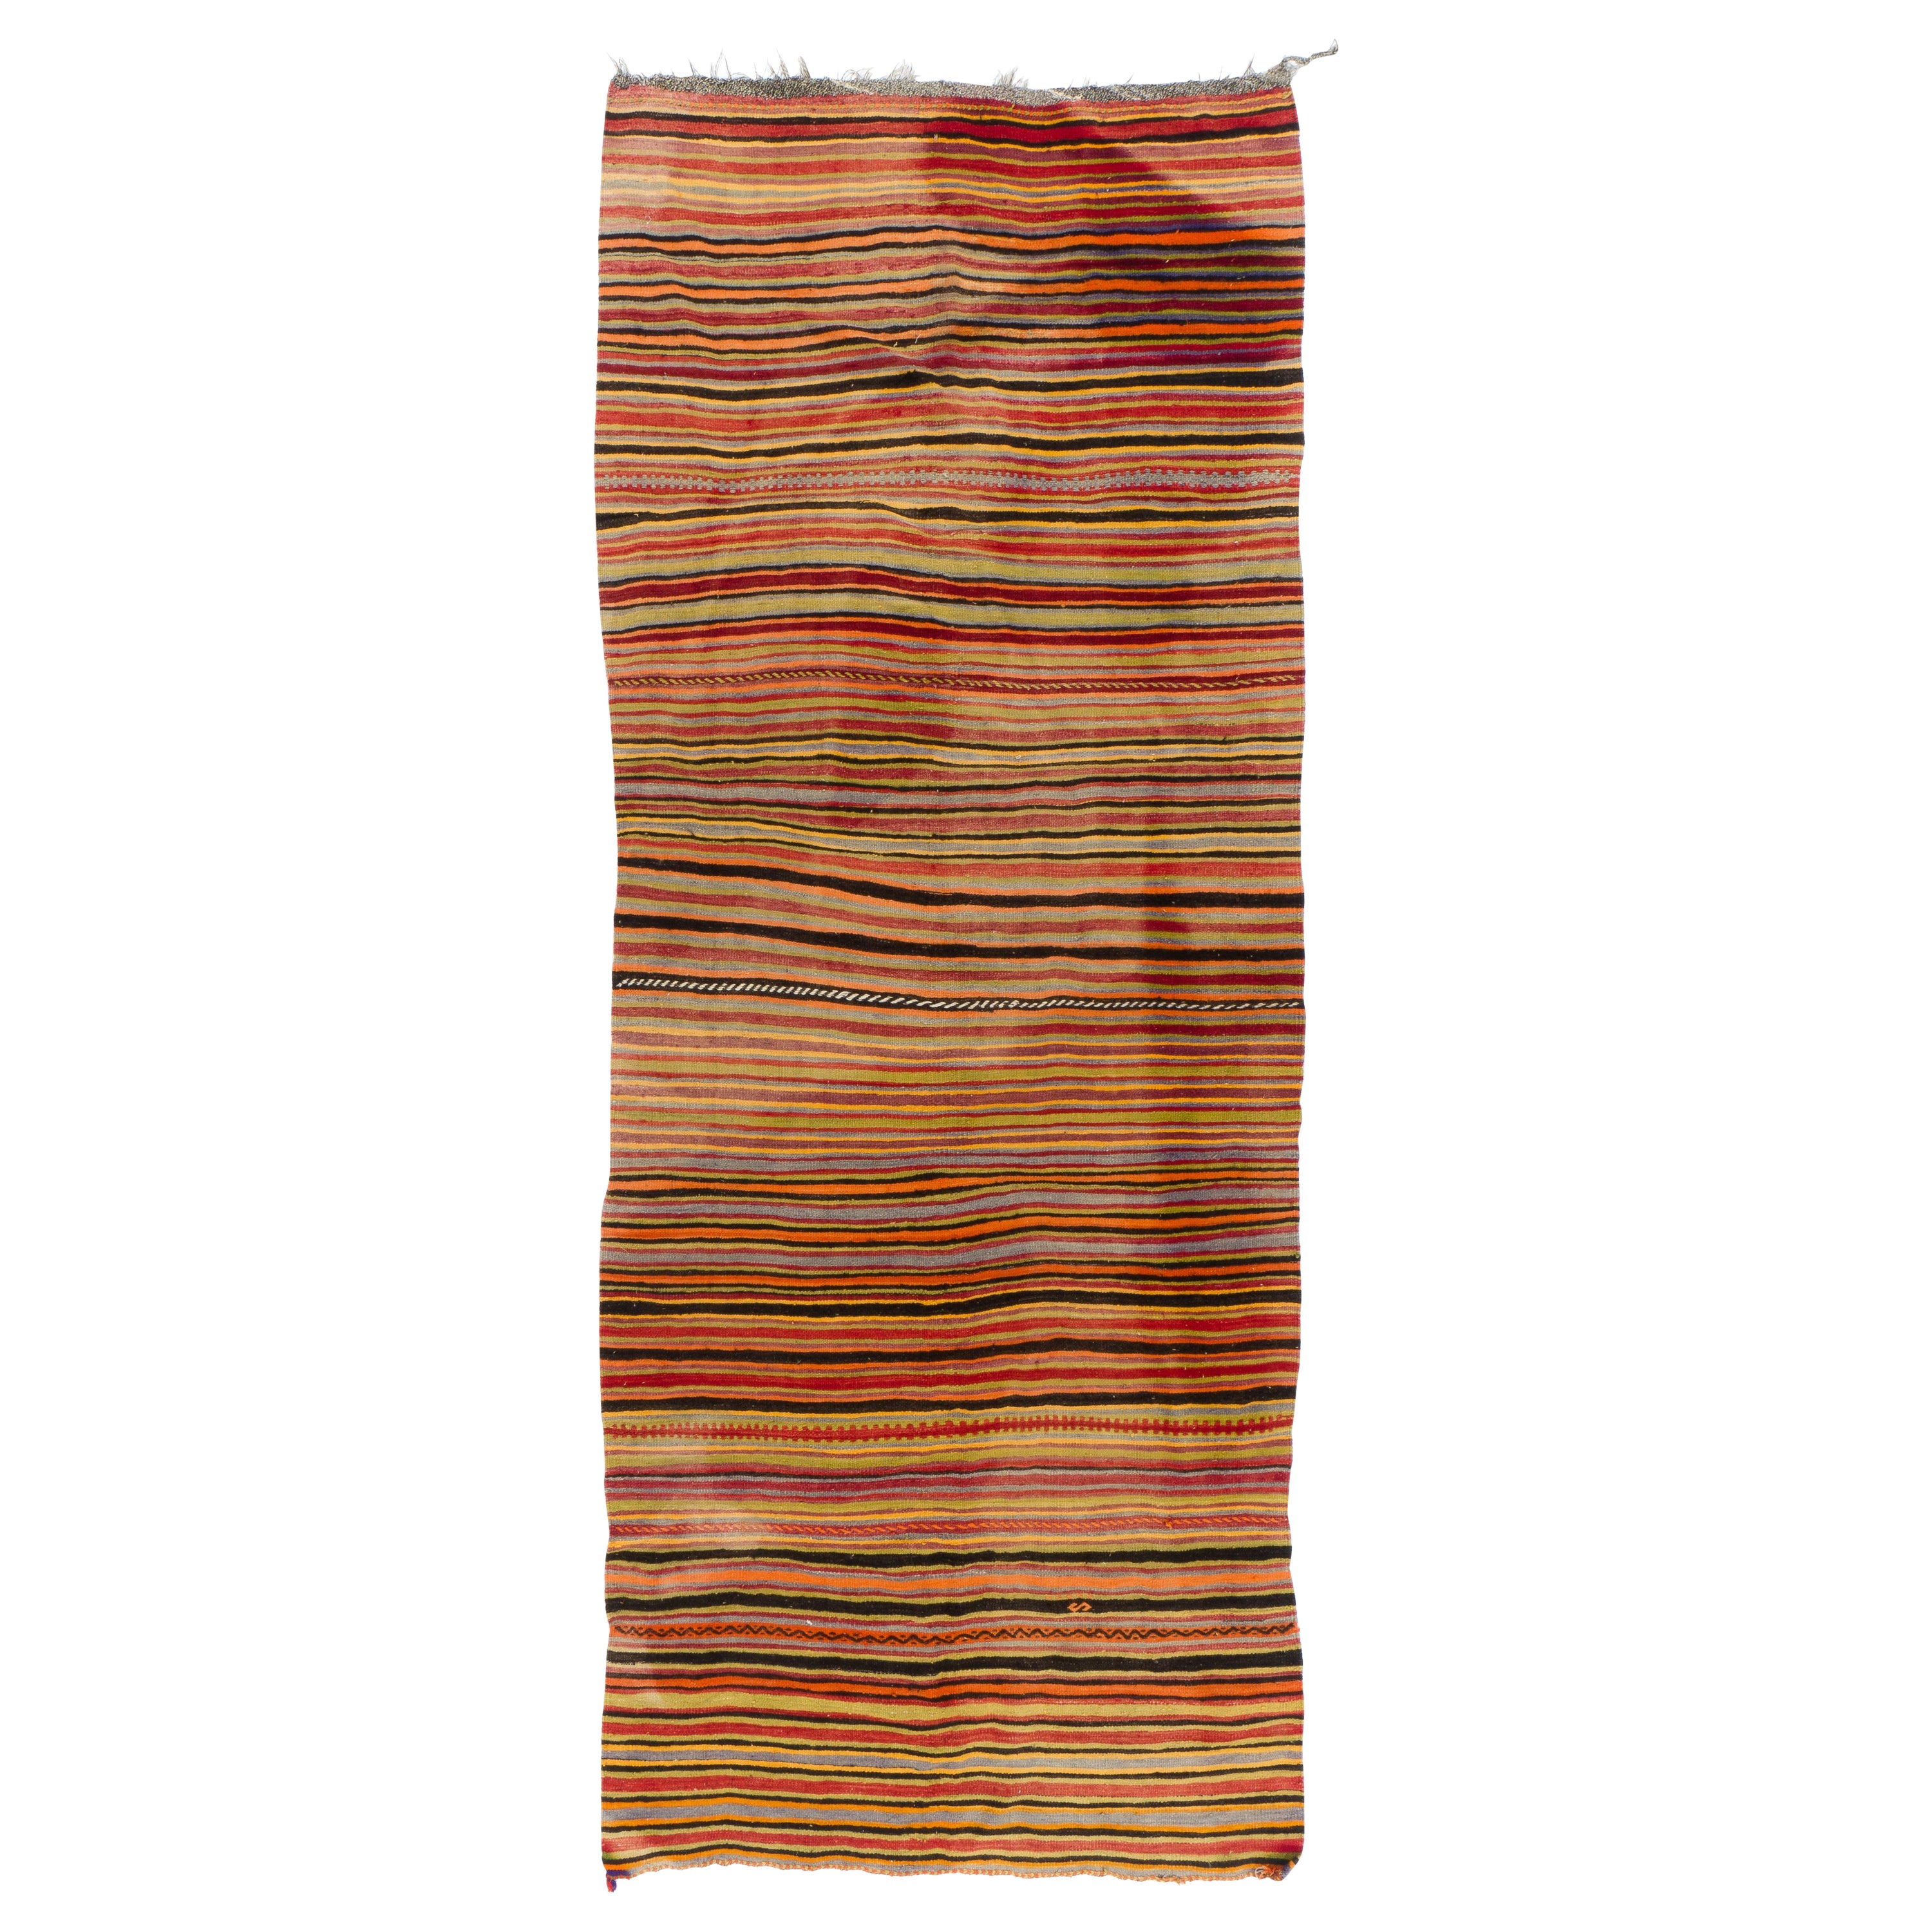 5.3x12.8 ft Hand-Woven Striped Vintage Anatolian Kilim "Flat-weave", Reversible